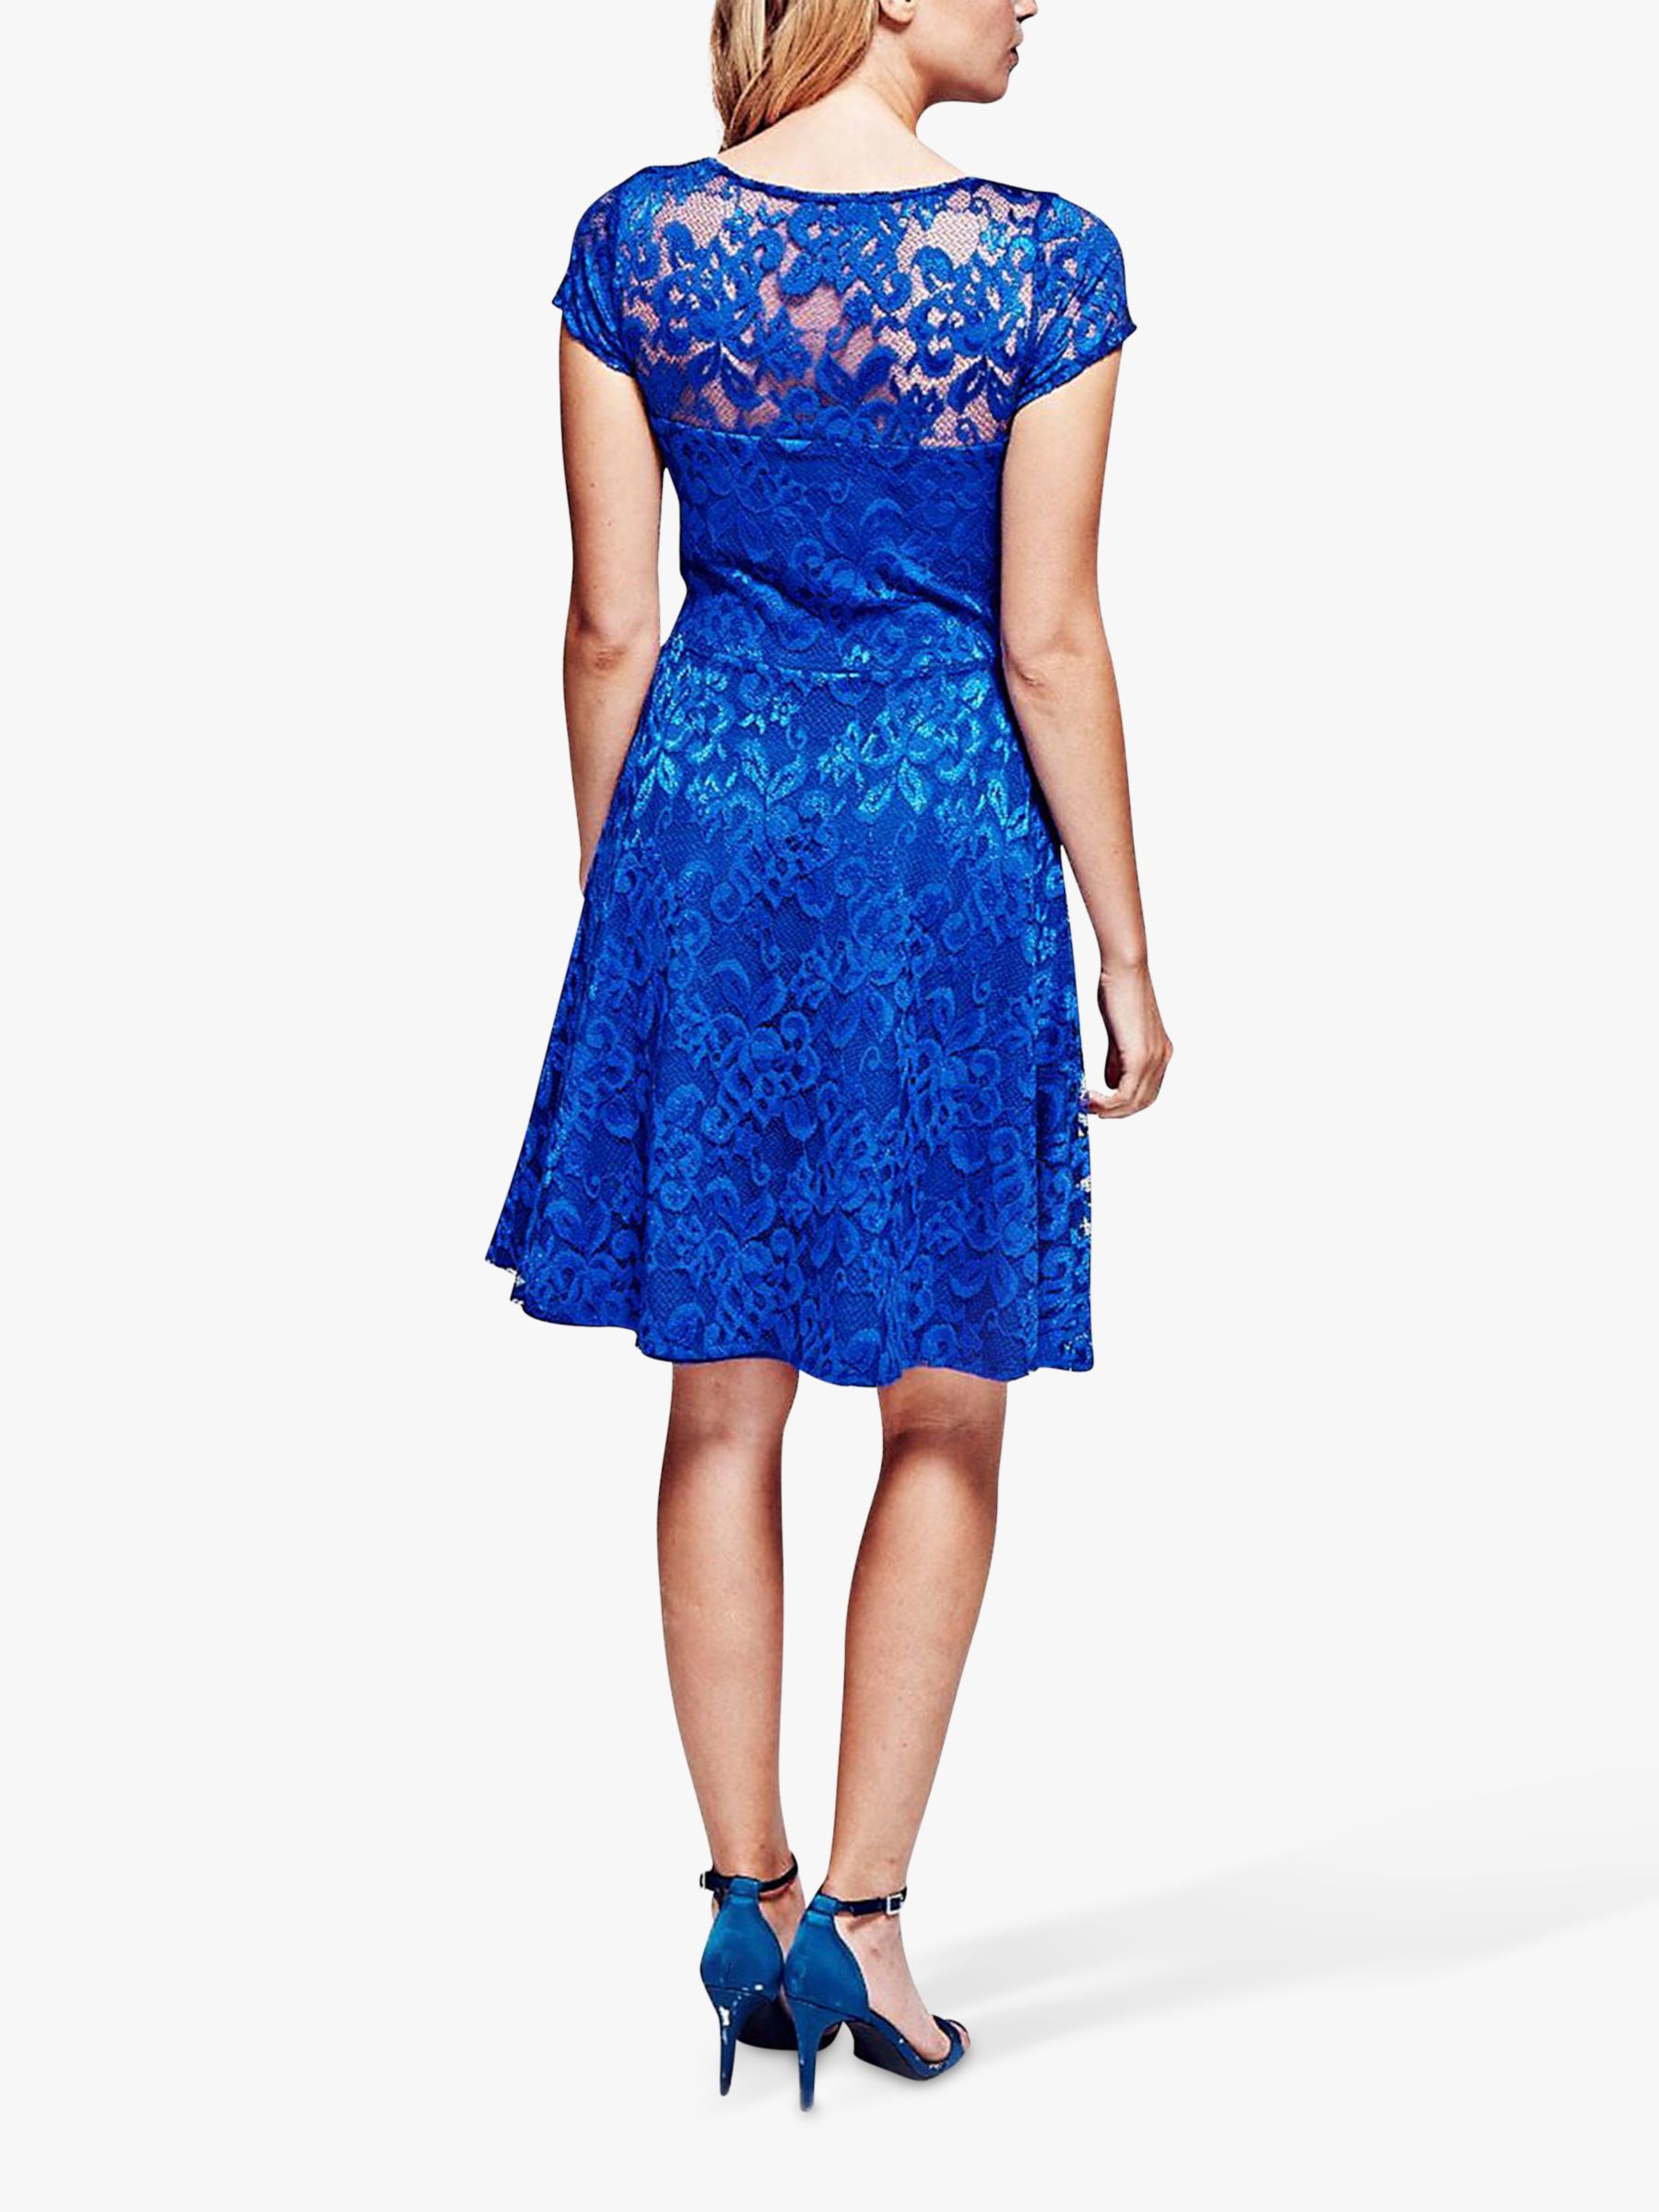 HotSquash Lace Skater Dress, Royal Blue, 8